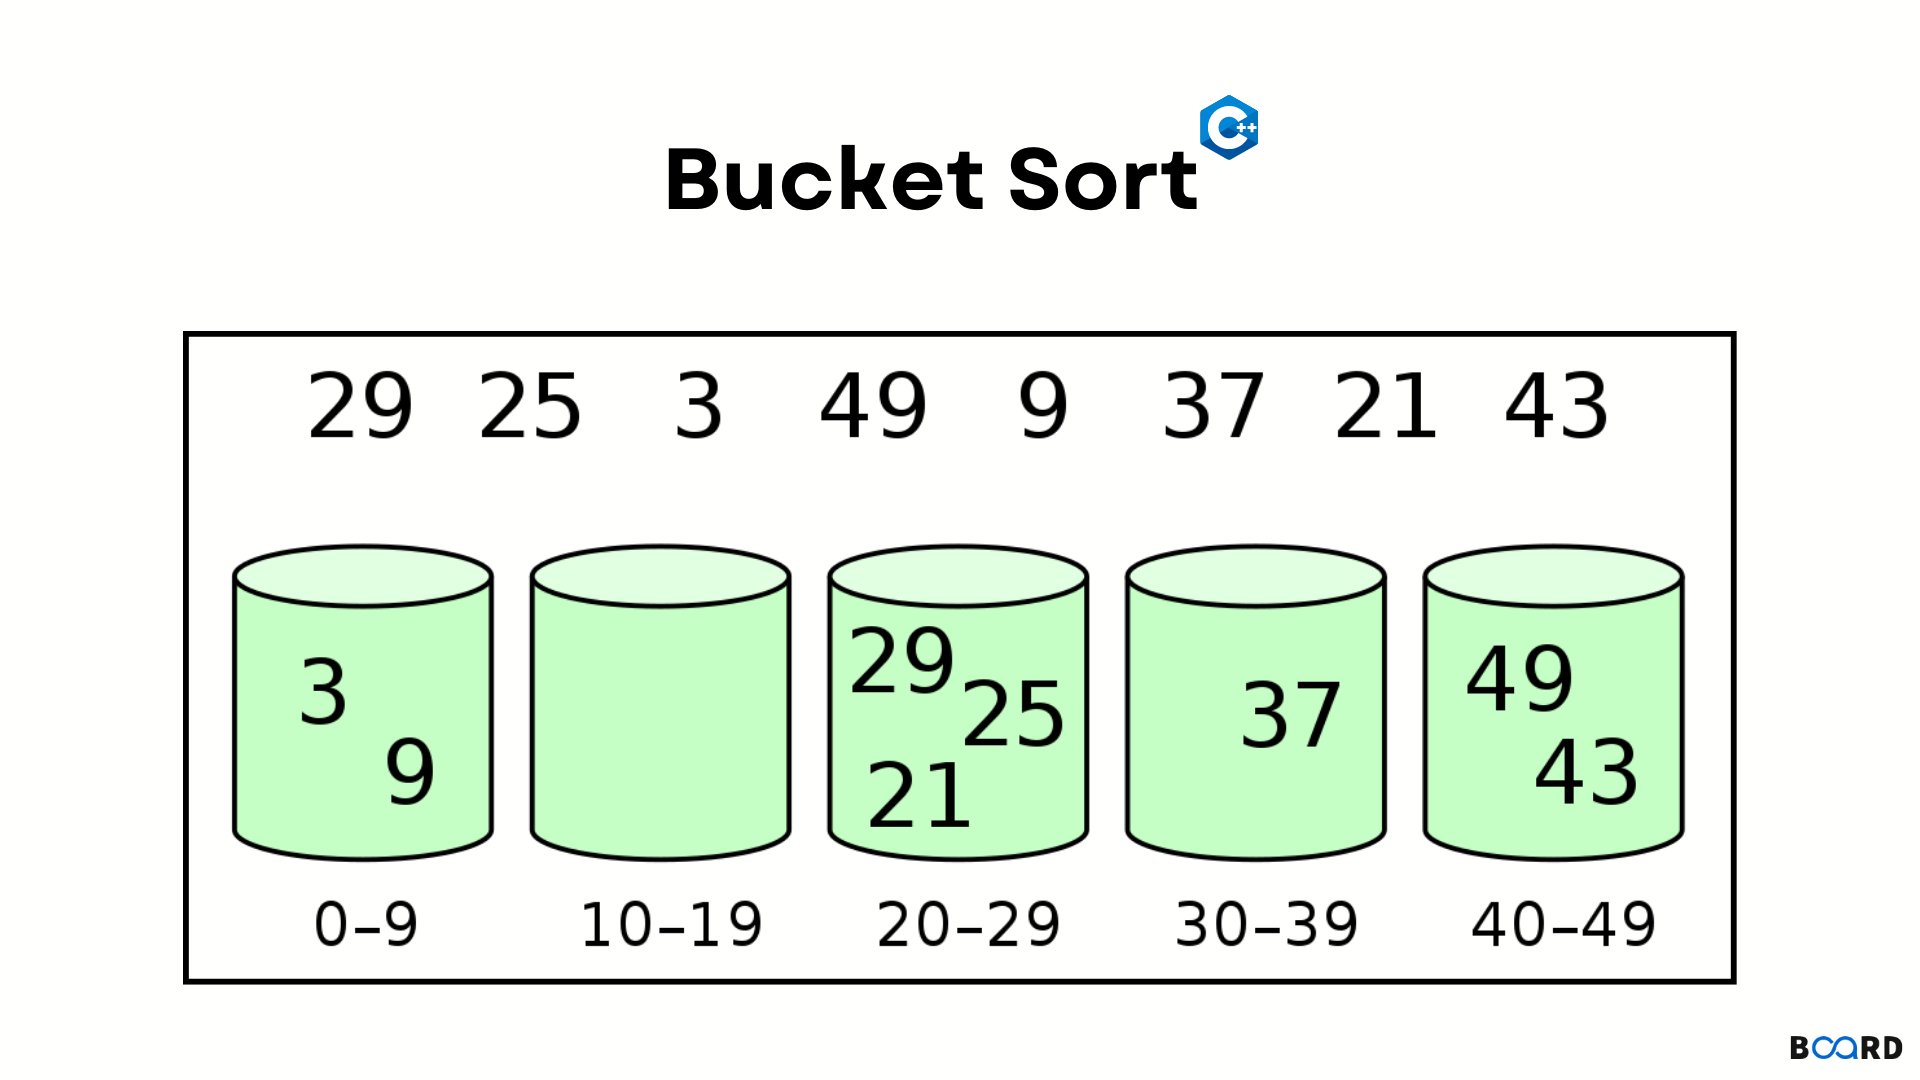 Bucket Sort Algorithm with C++